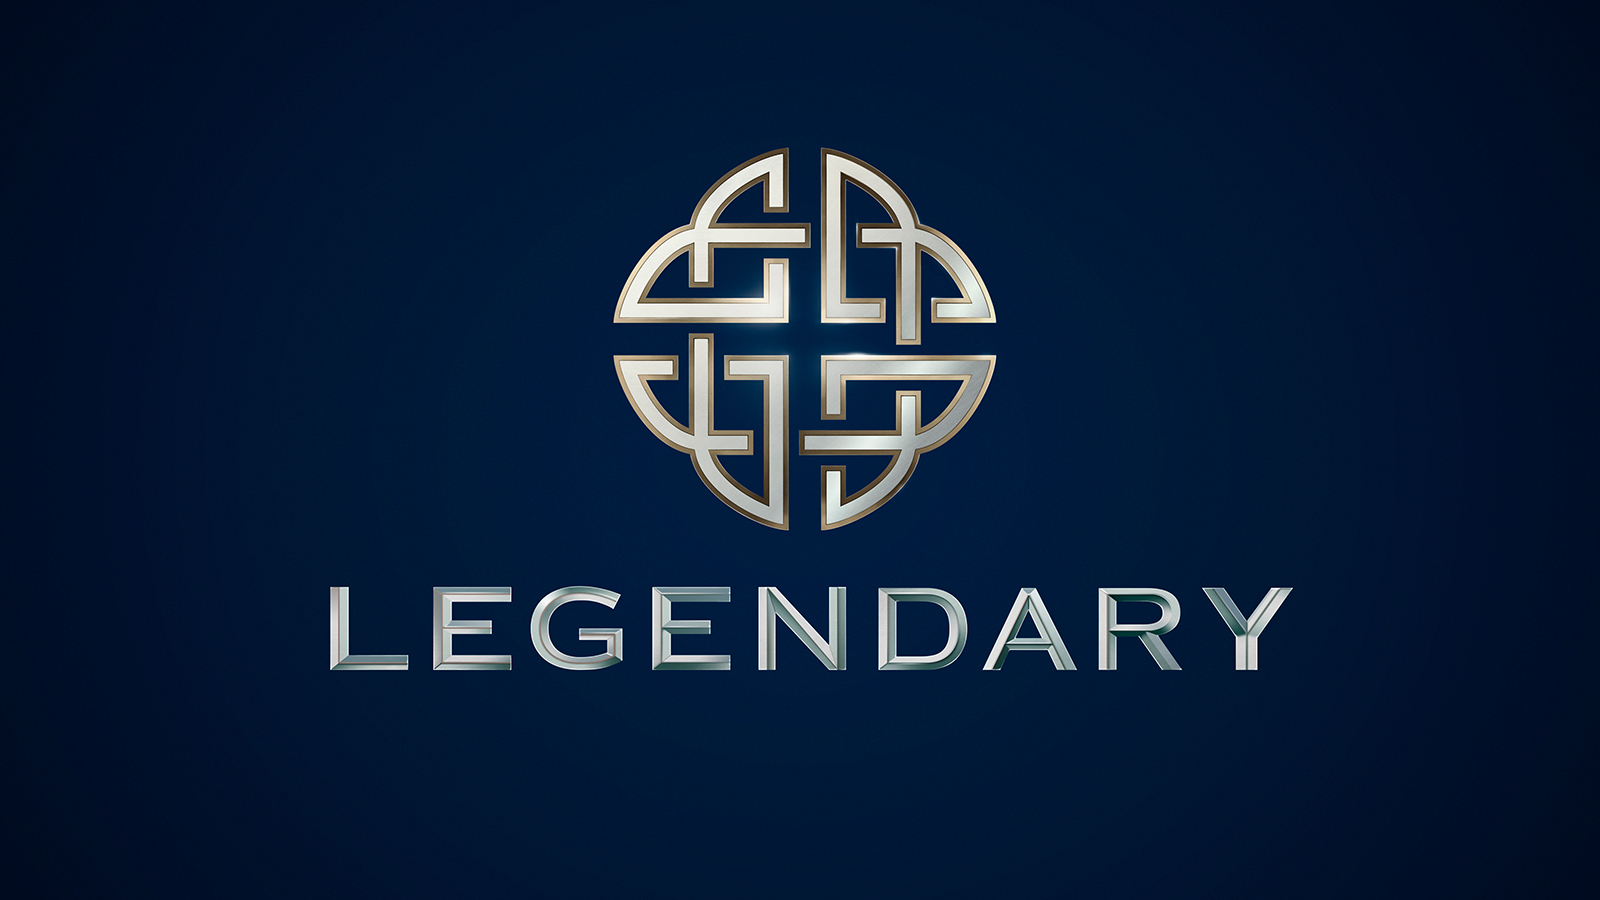 Peter Dinklage To Star In Legendary’s ‘Toxic Avenger’ Reboot